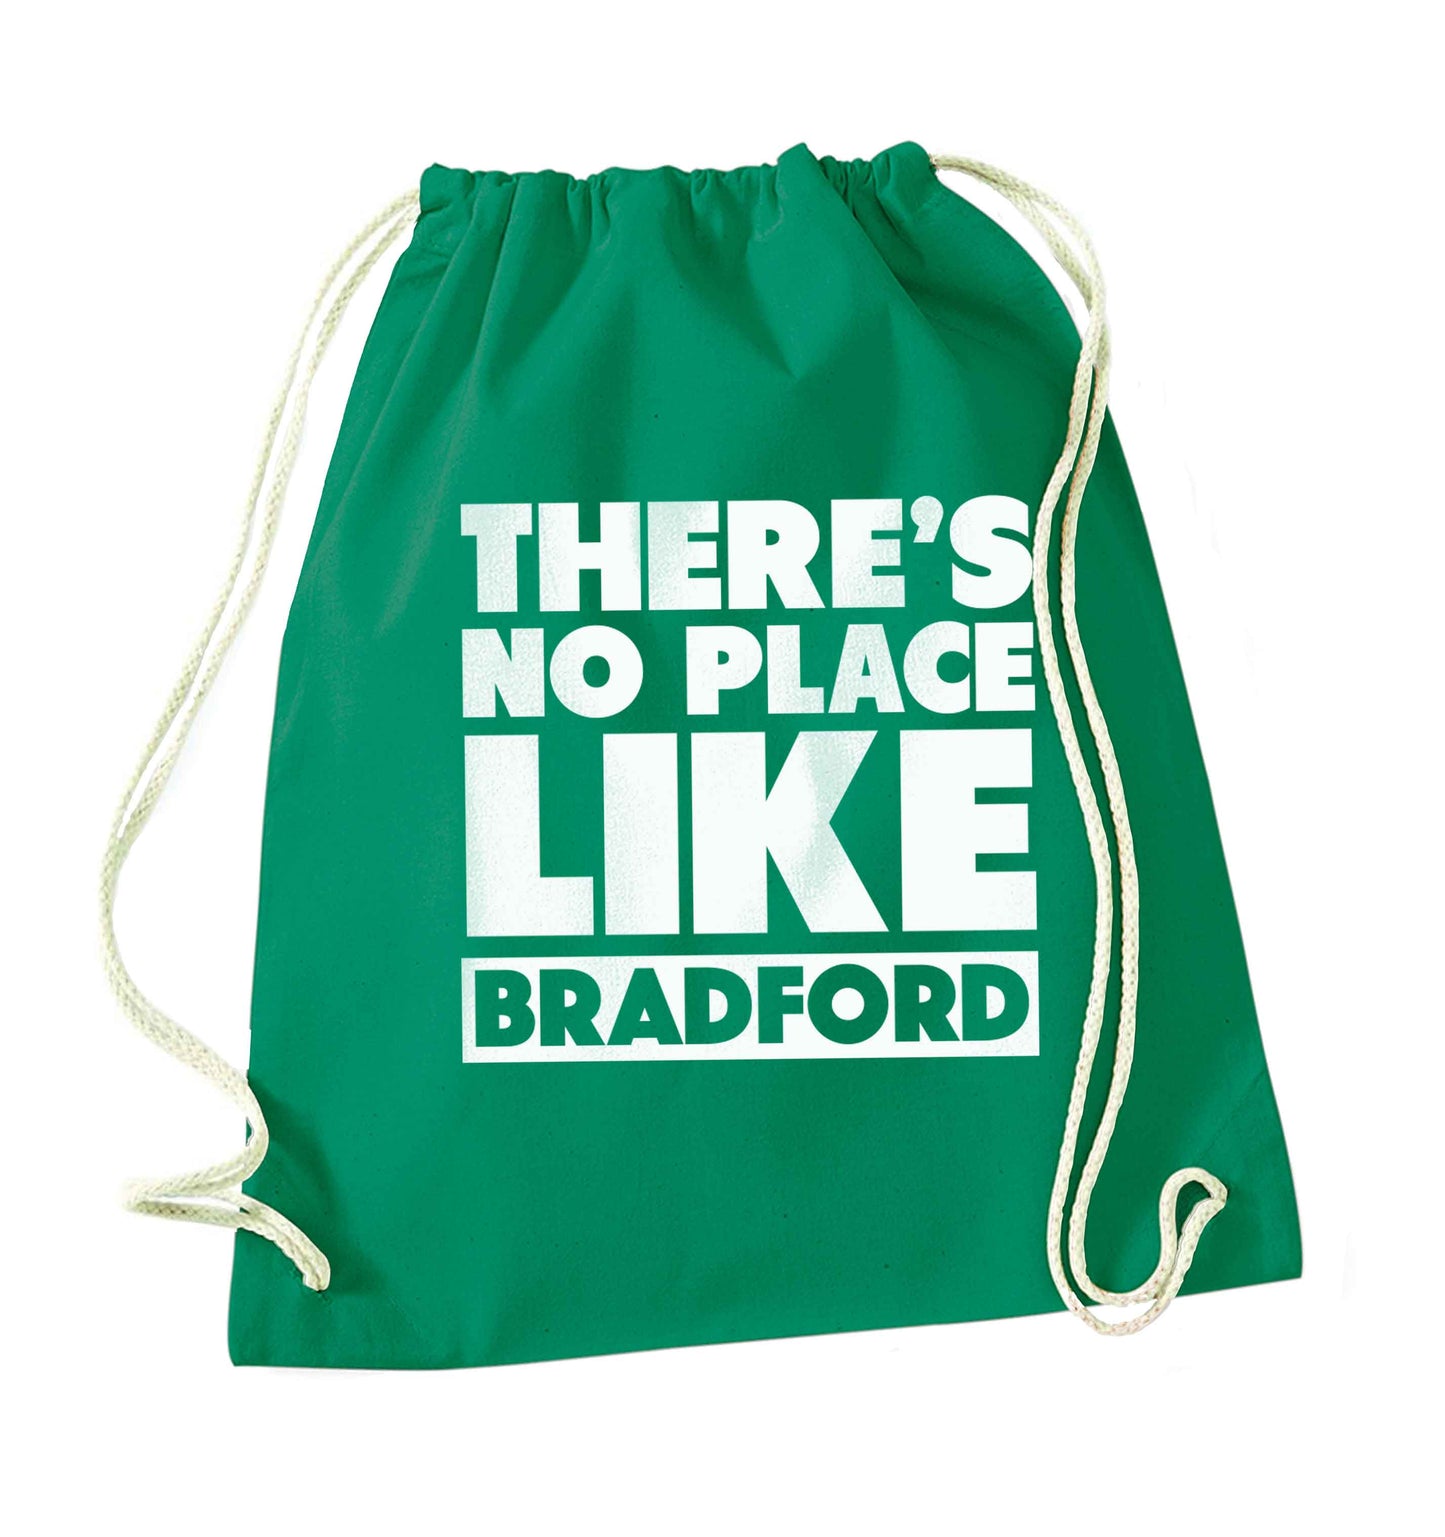 There's no place like Bradford green drawstring bag